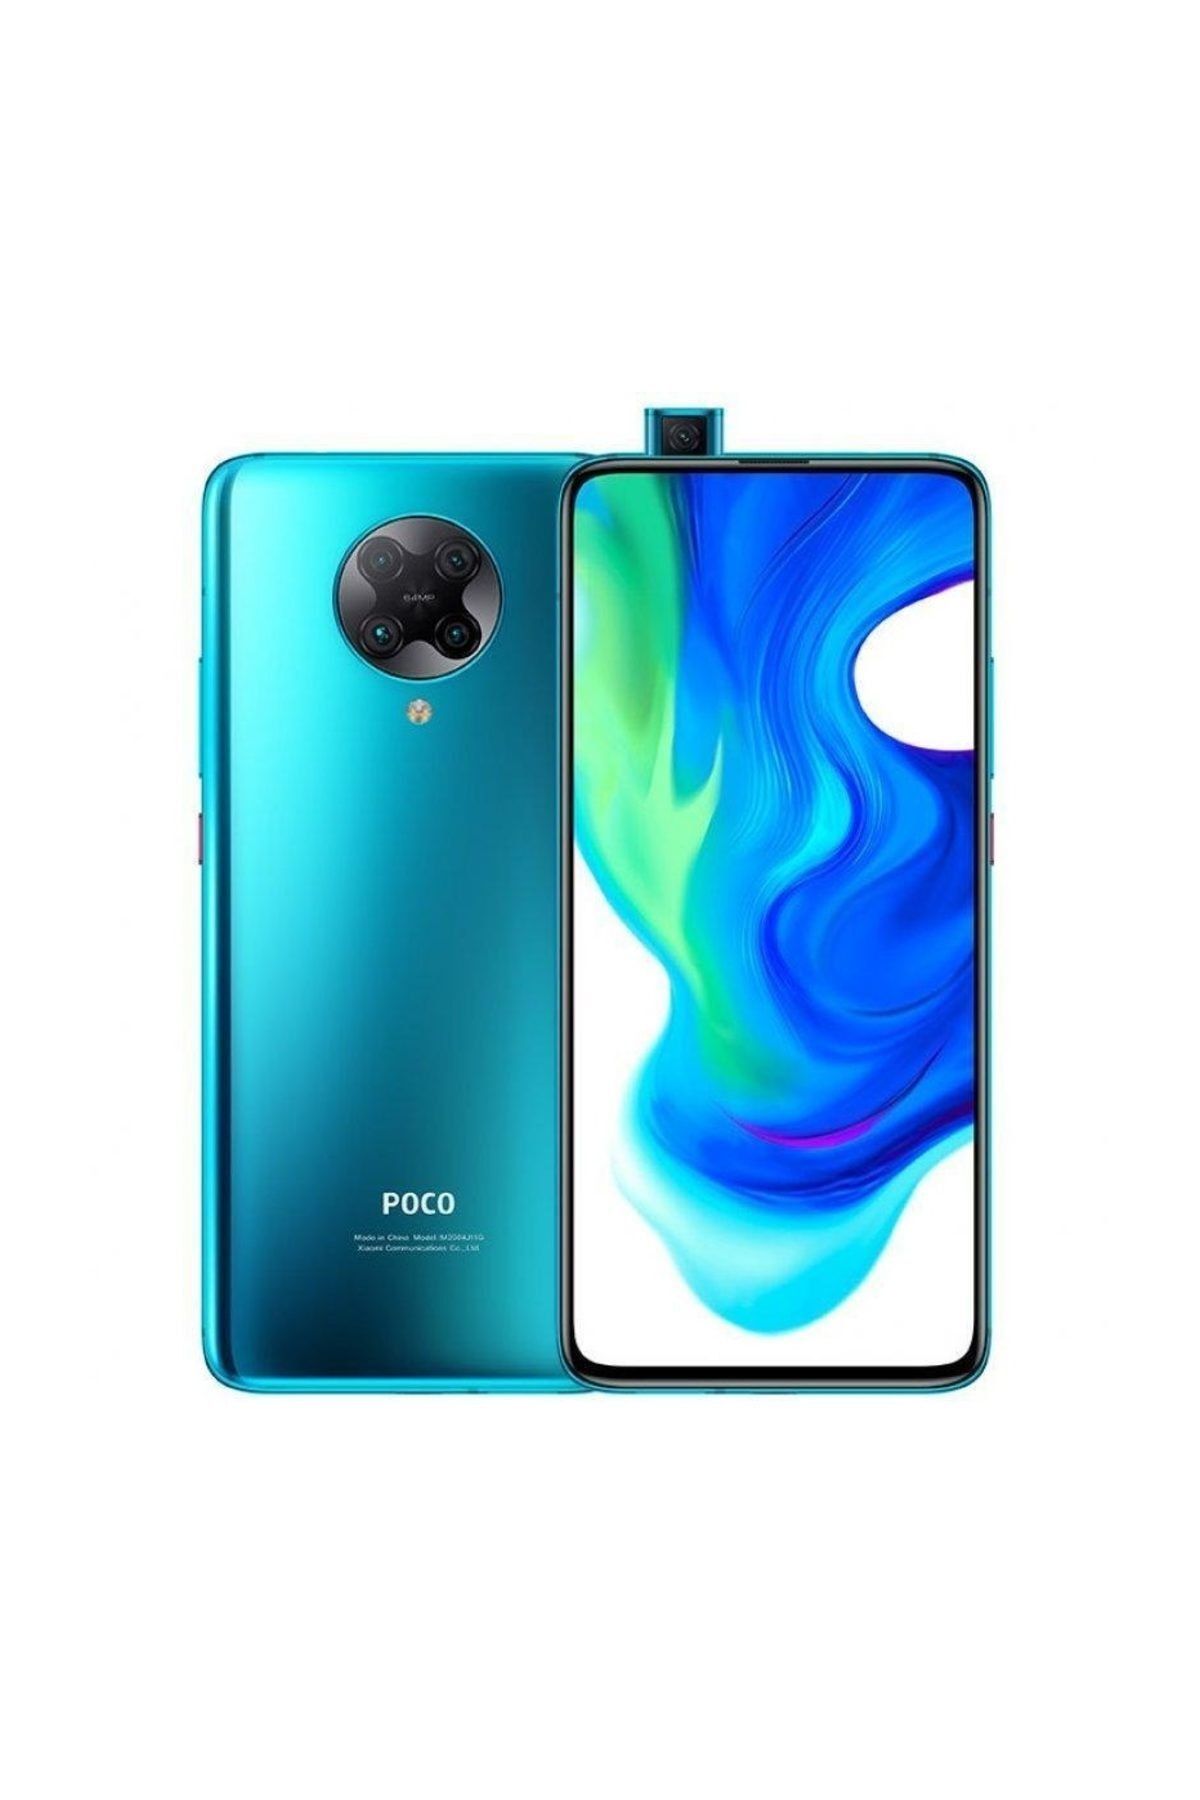 Xiaomi POCO F2 Pro 6 GB+128 GB Akıllı Cep Telefonu - Mavi (Xiaomi Türkiye 
Garantili) PC-F2PRO